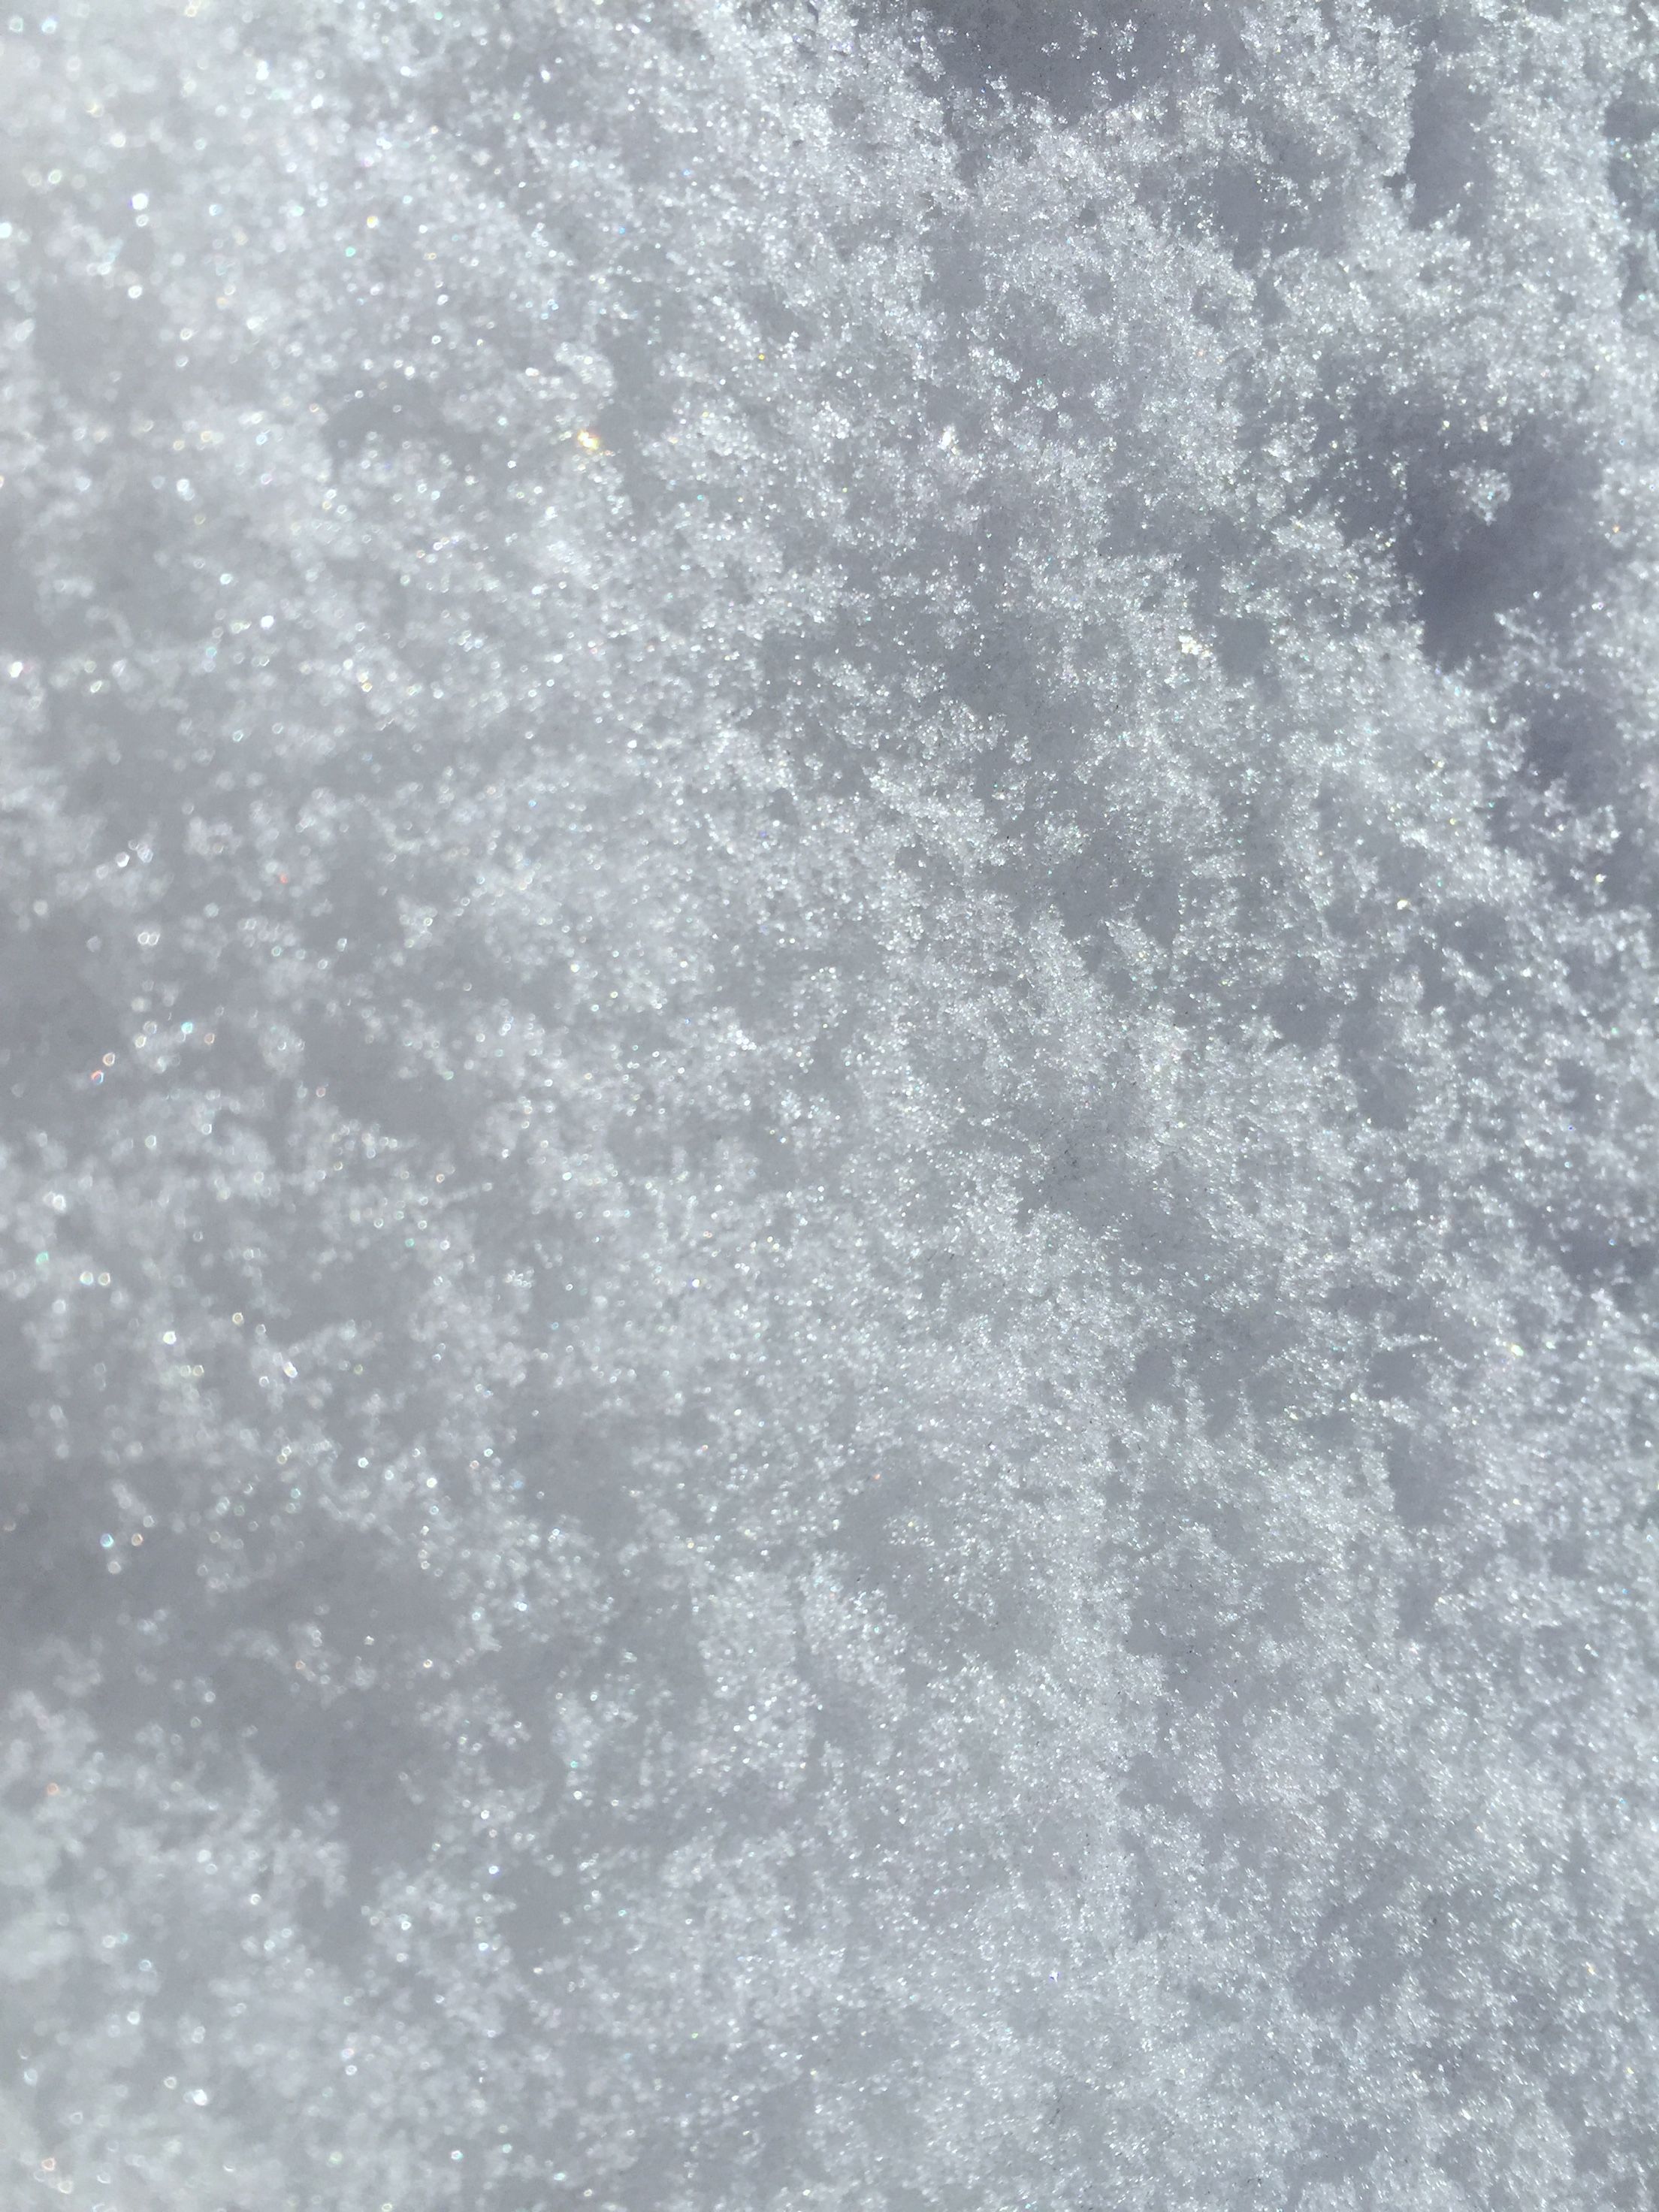 Minimalist Snow Texture Wallpaper for iPhone 6 Plus & iPad Air